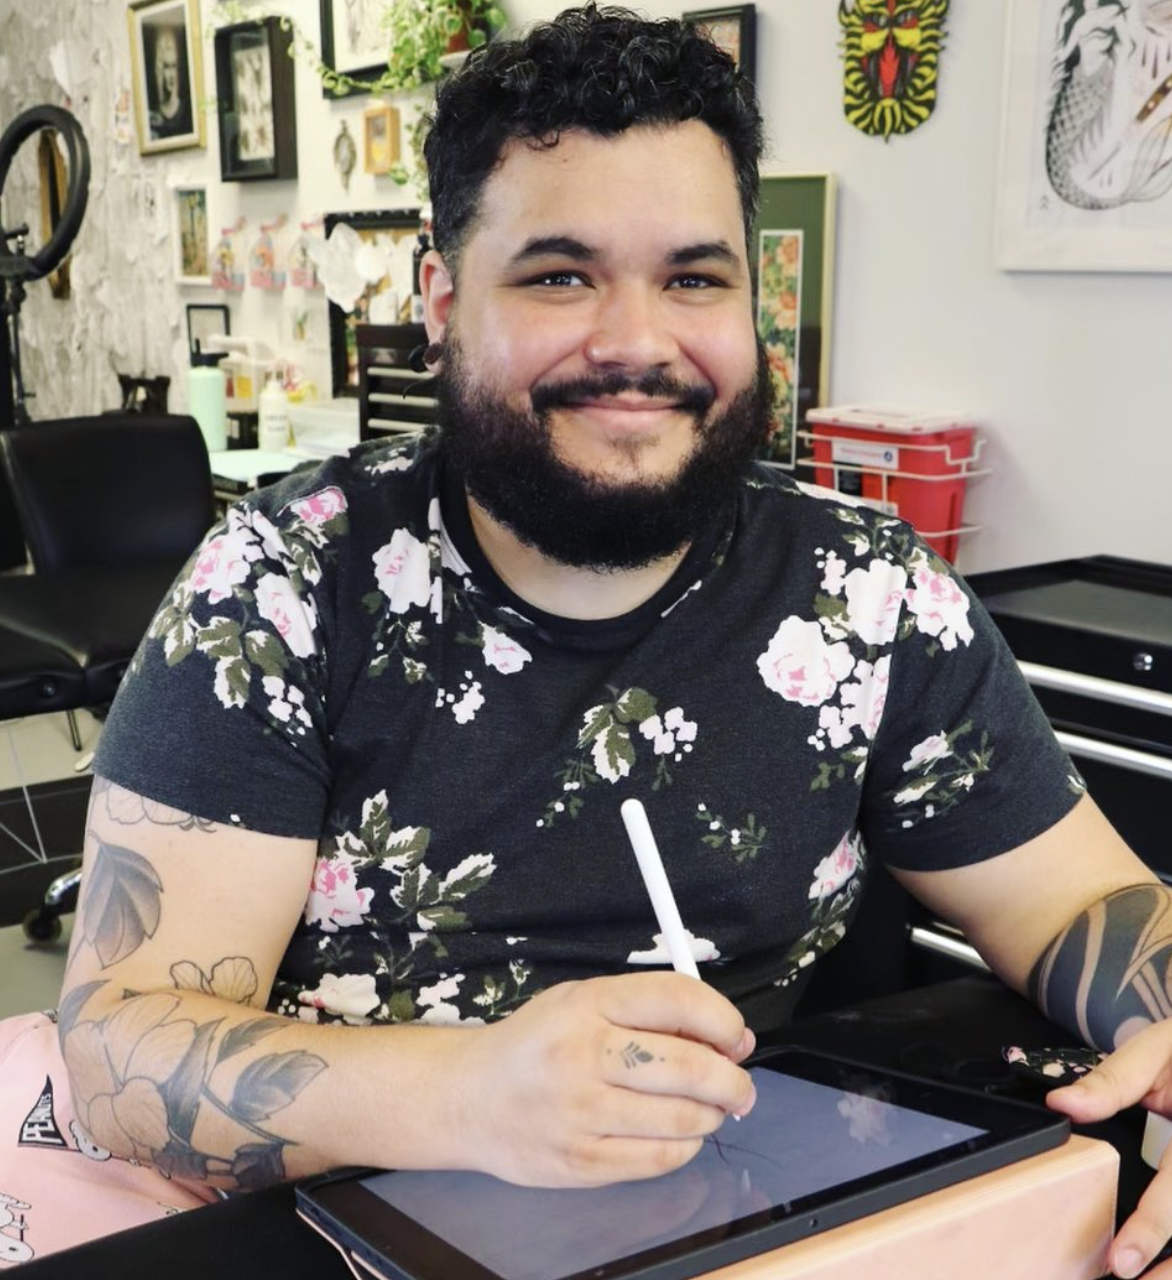 The Ten Best Tattoo Shops in Miami